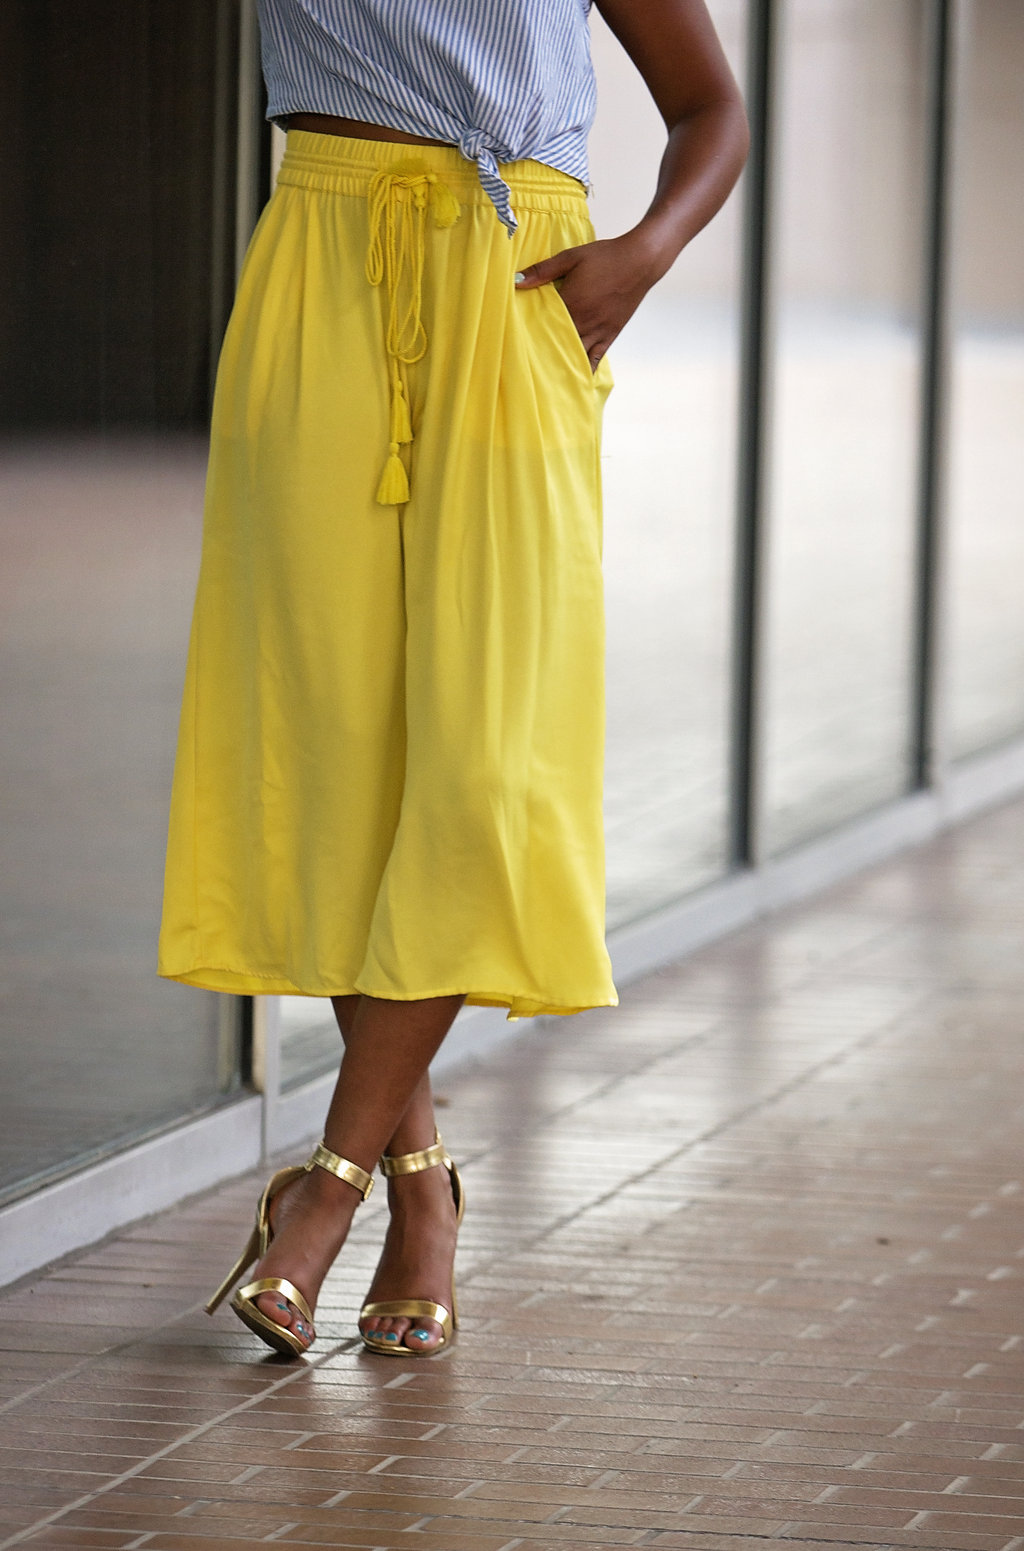 how to style culottes, louisiana fashion blogger